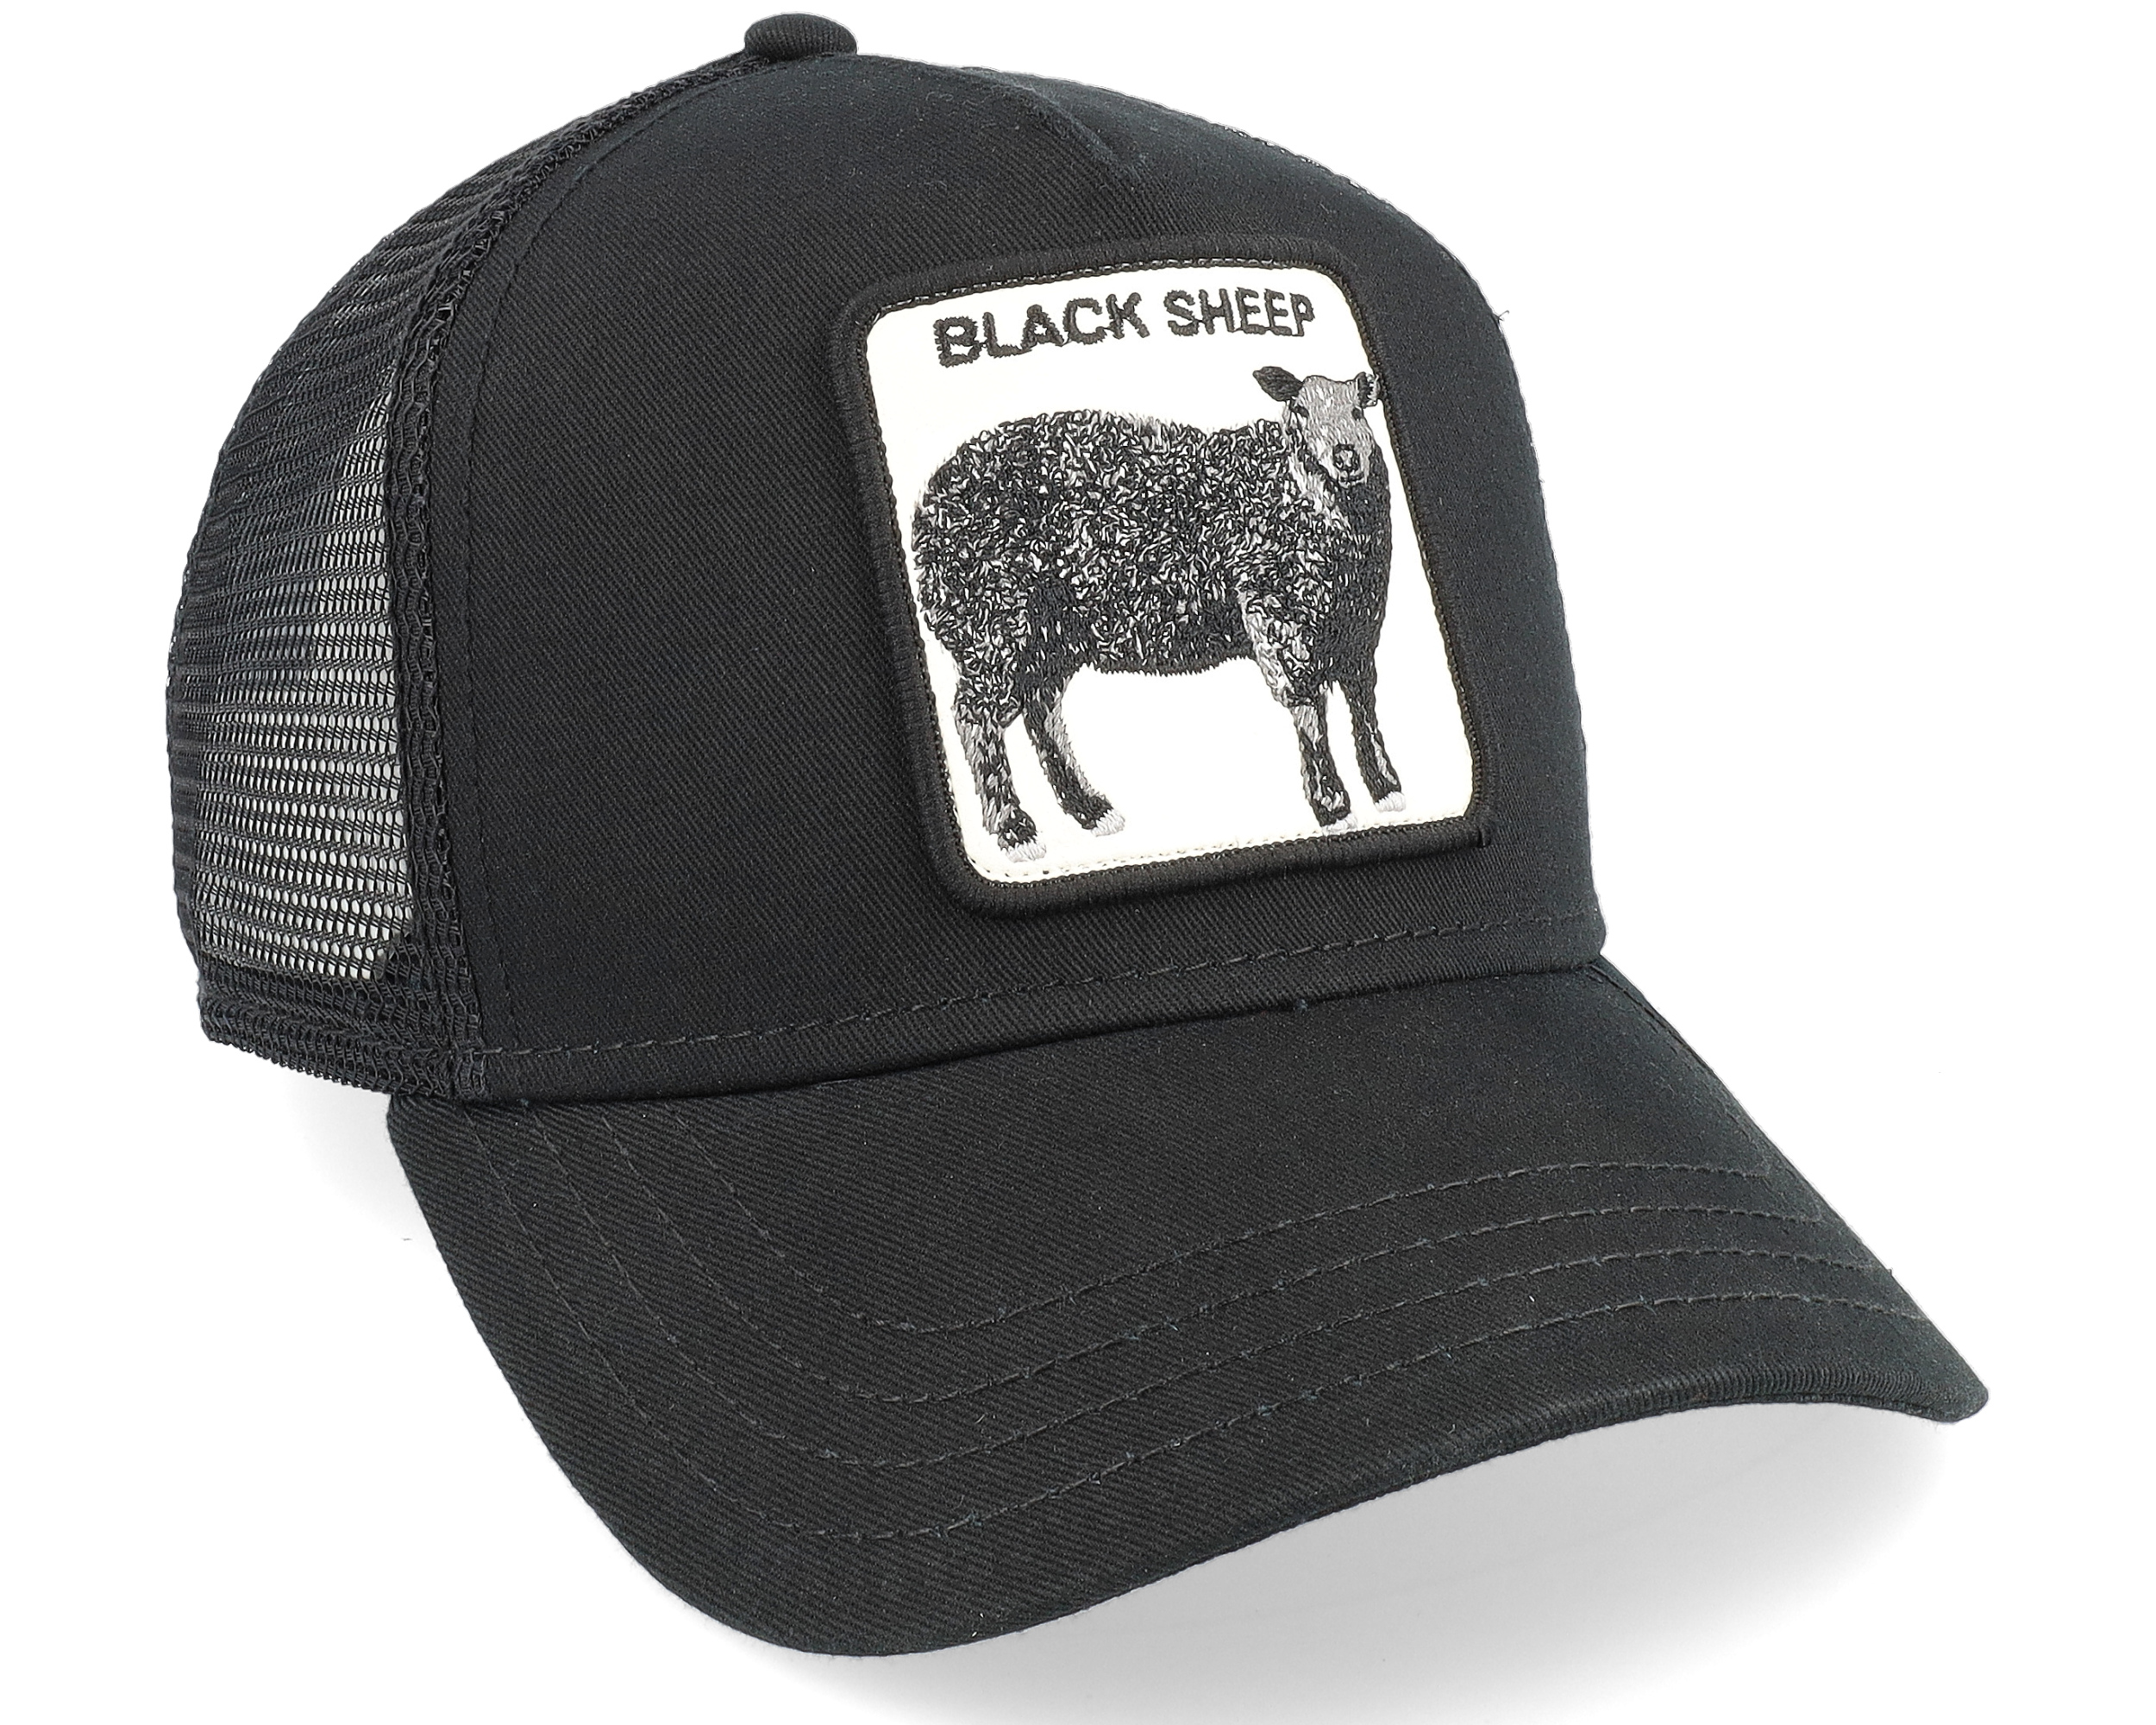 The Black Sheep Black Trucker - Goorin Bros.